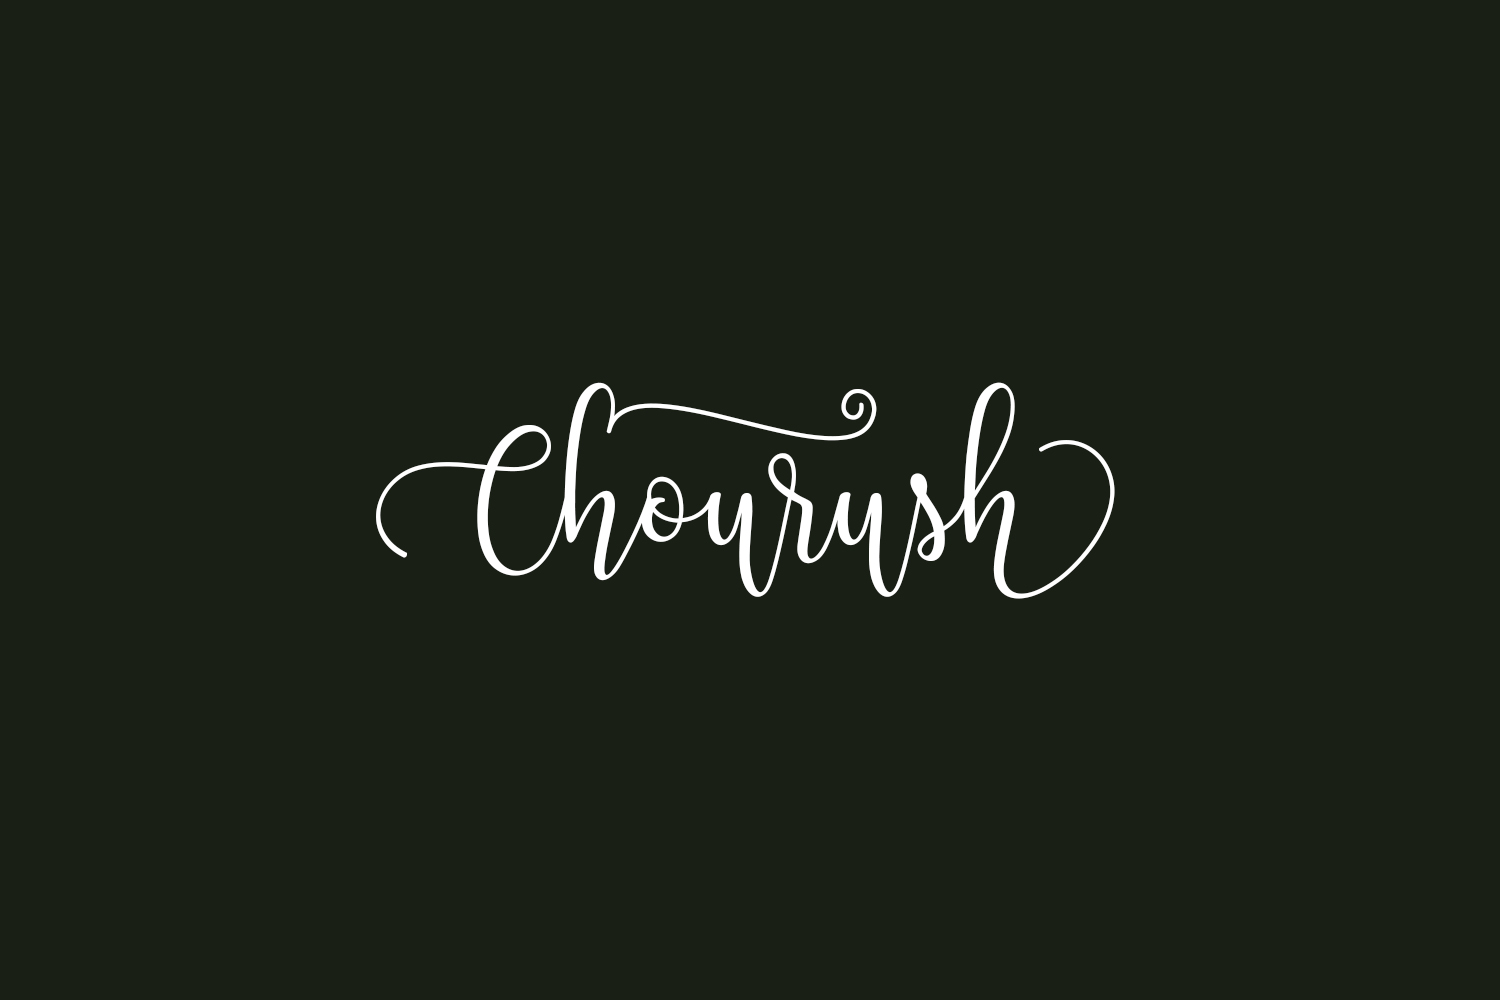 Chourush Free Font